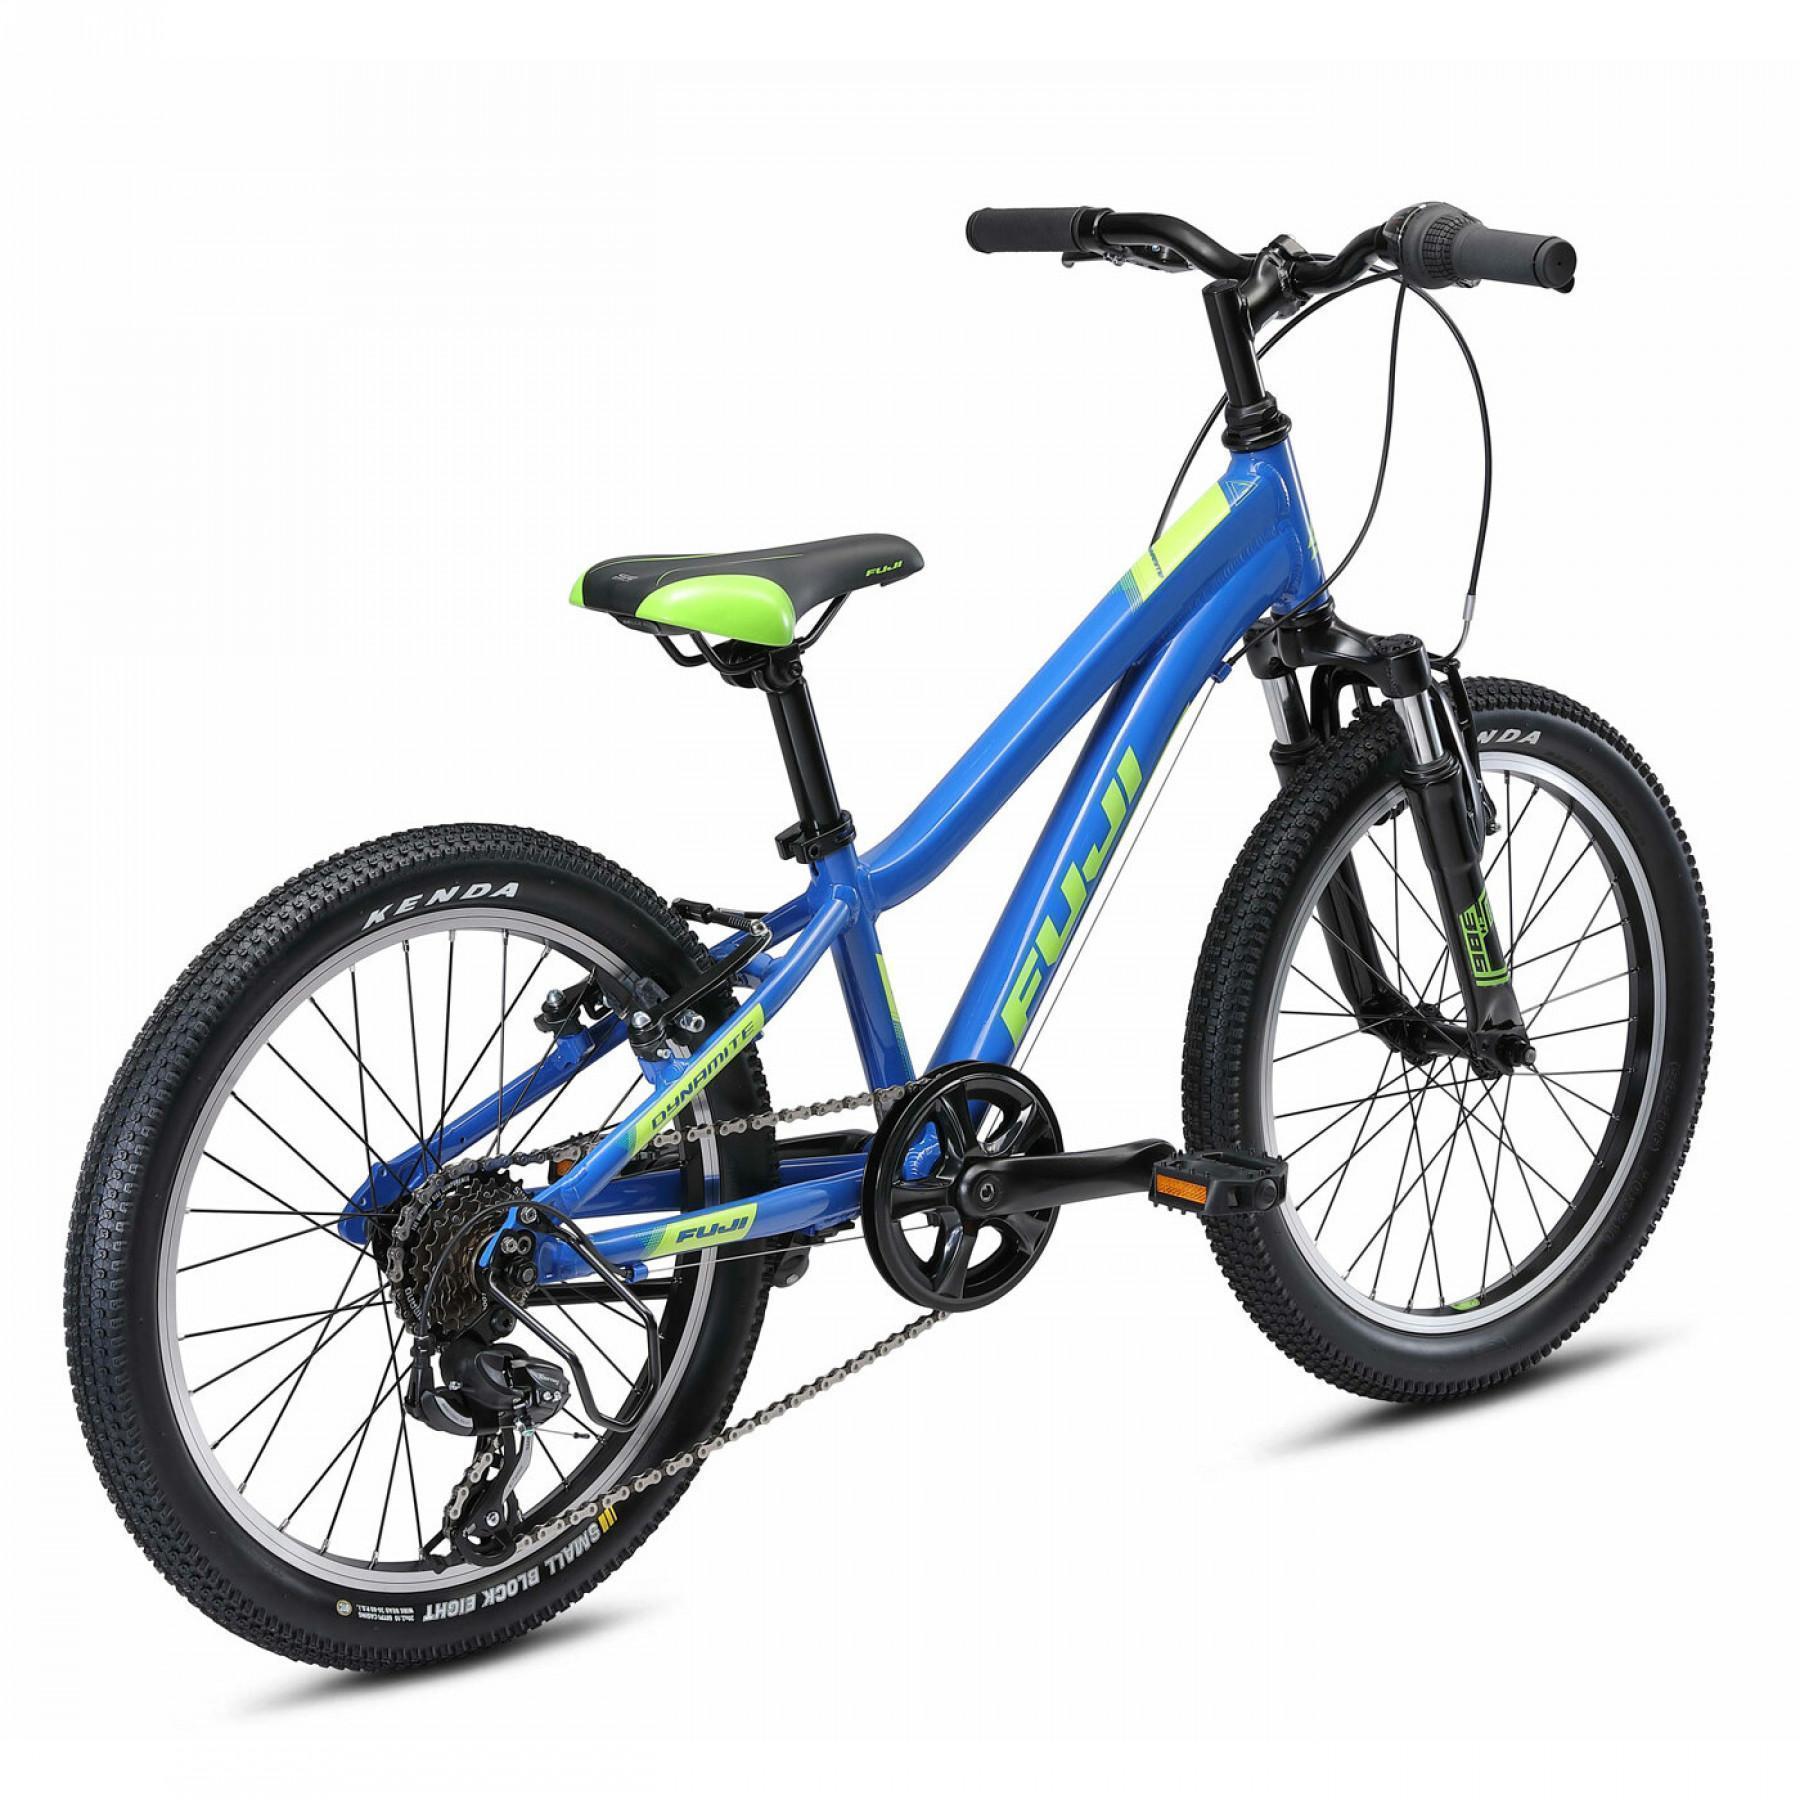 Mountain bike per bambini Fuji Dynamite 20 2021